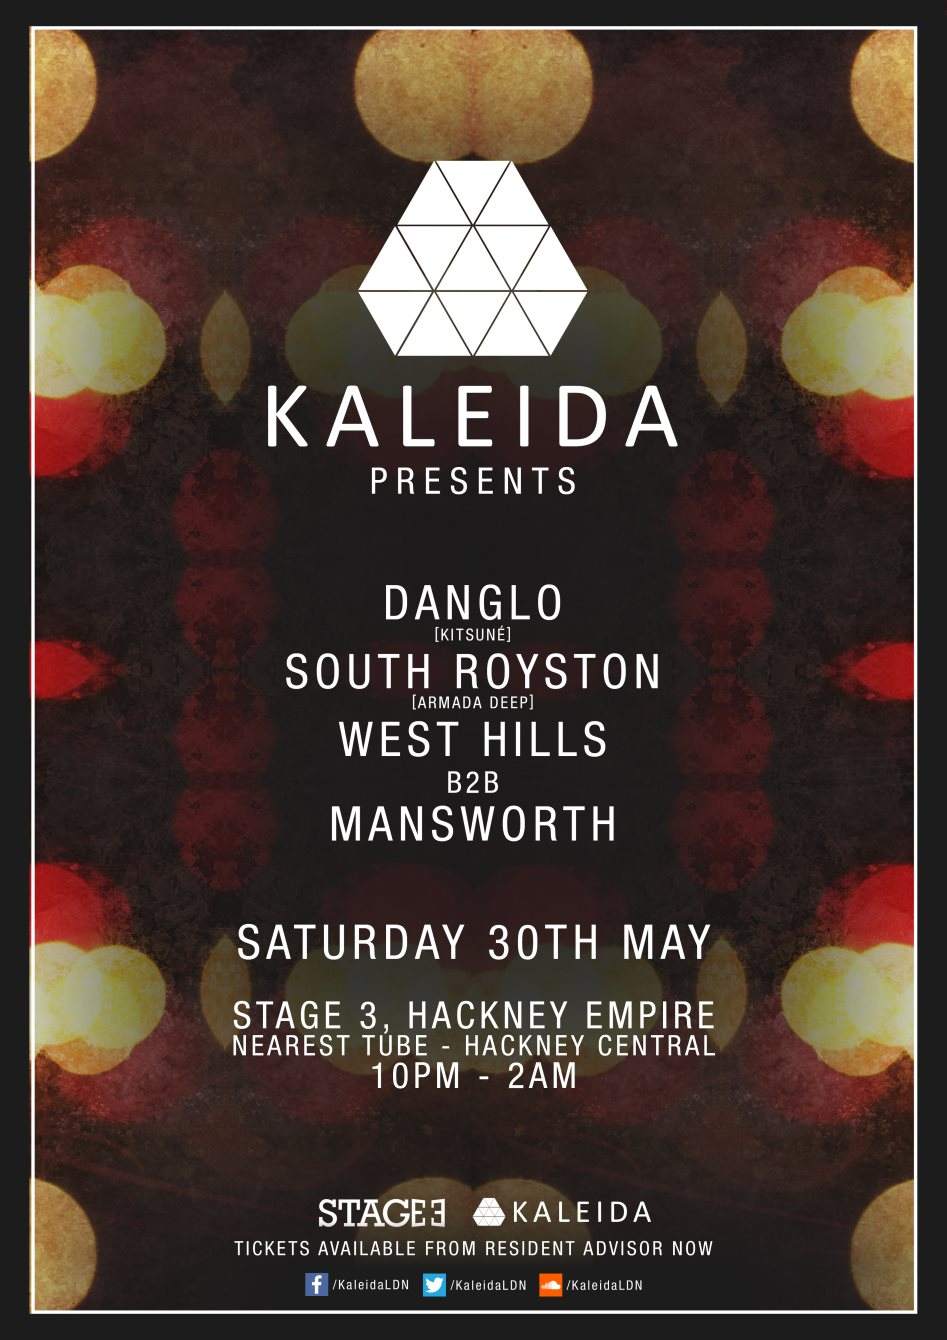 Kaleida presents: Danglo, South Royston, West Hills, Mansworth - フライヤー表